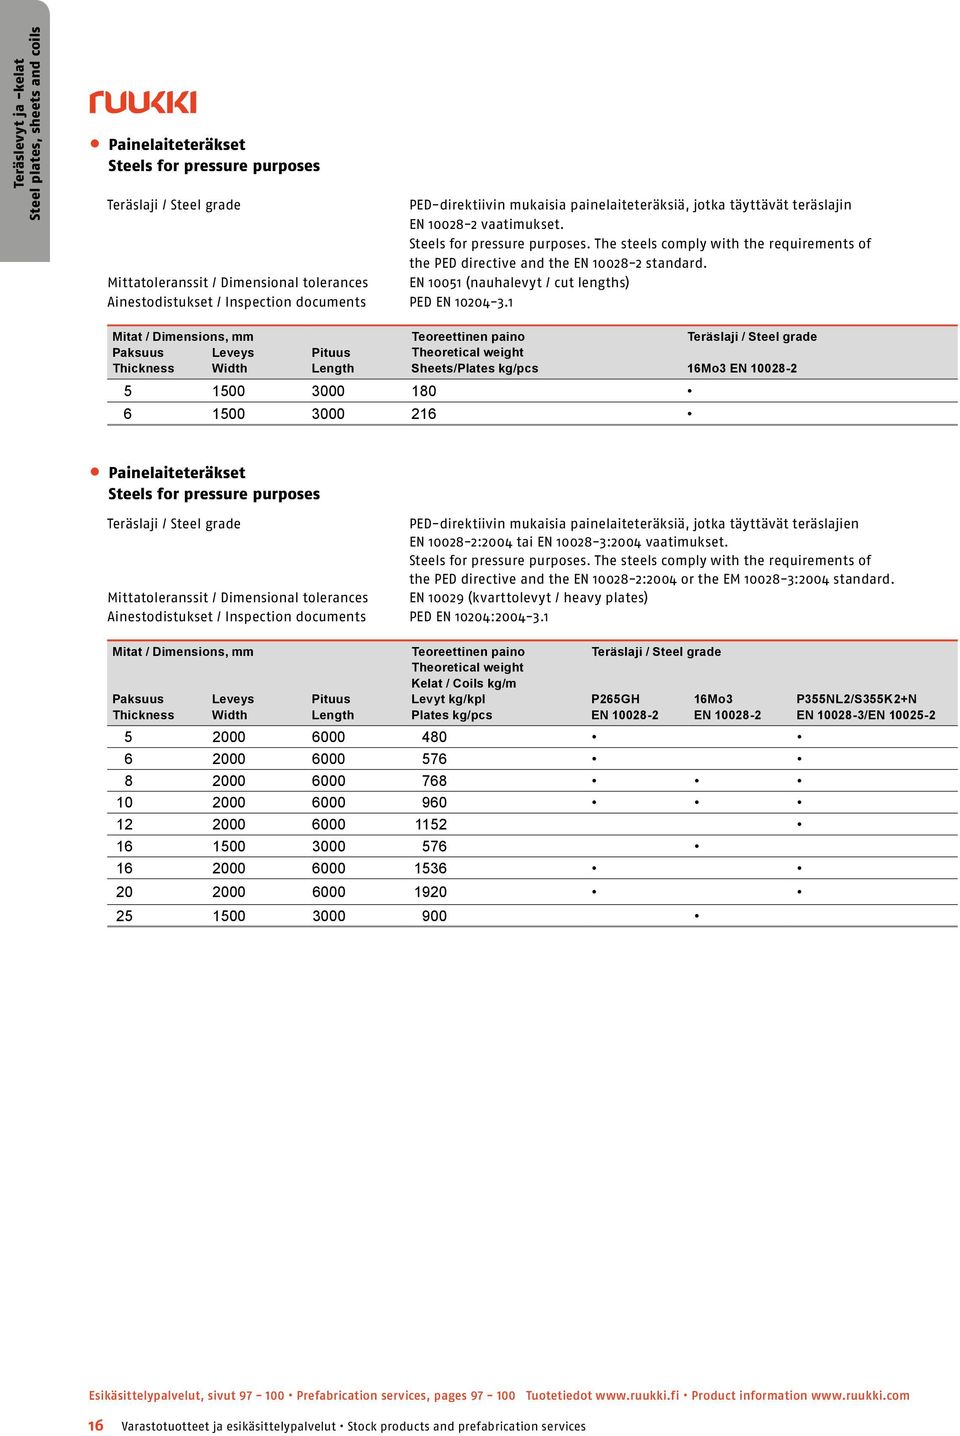 Mittatoleranssit / Dimensional tolerances EN 10051 (nauhalevyt / cut lengths) Ainestodistukset / Inspection documents PED EN 10204-3.